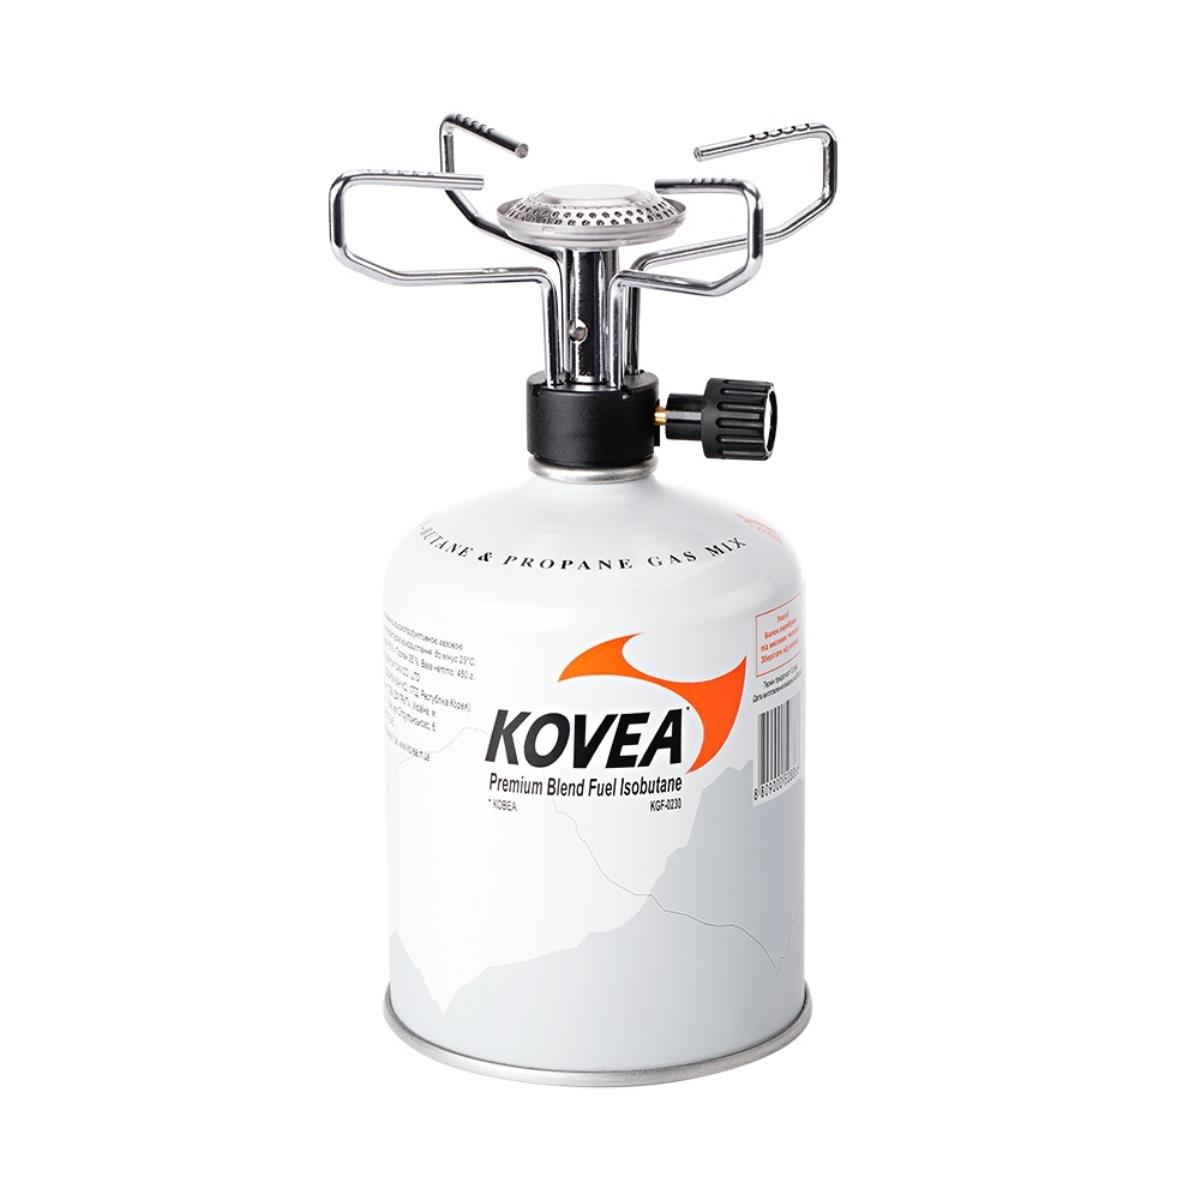 Горелка газовая (TKB-9209) Kovea горелка газовая со шлангом kb 0211l kovea